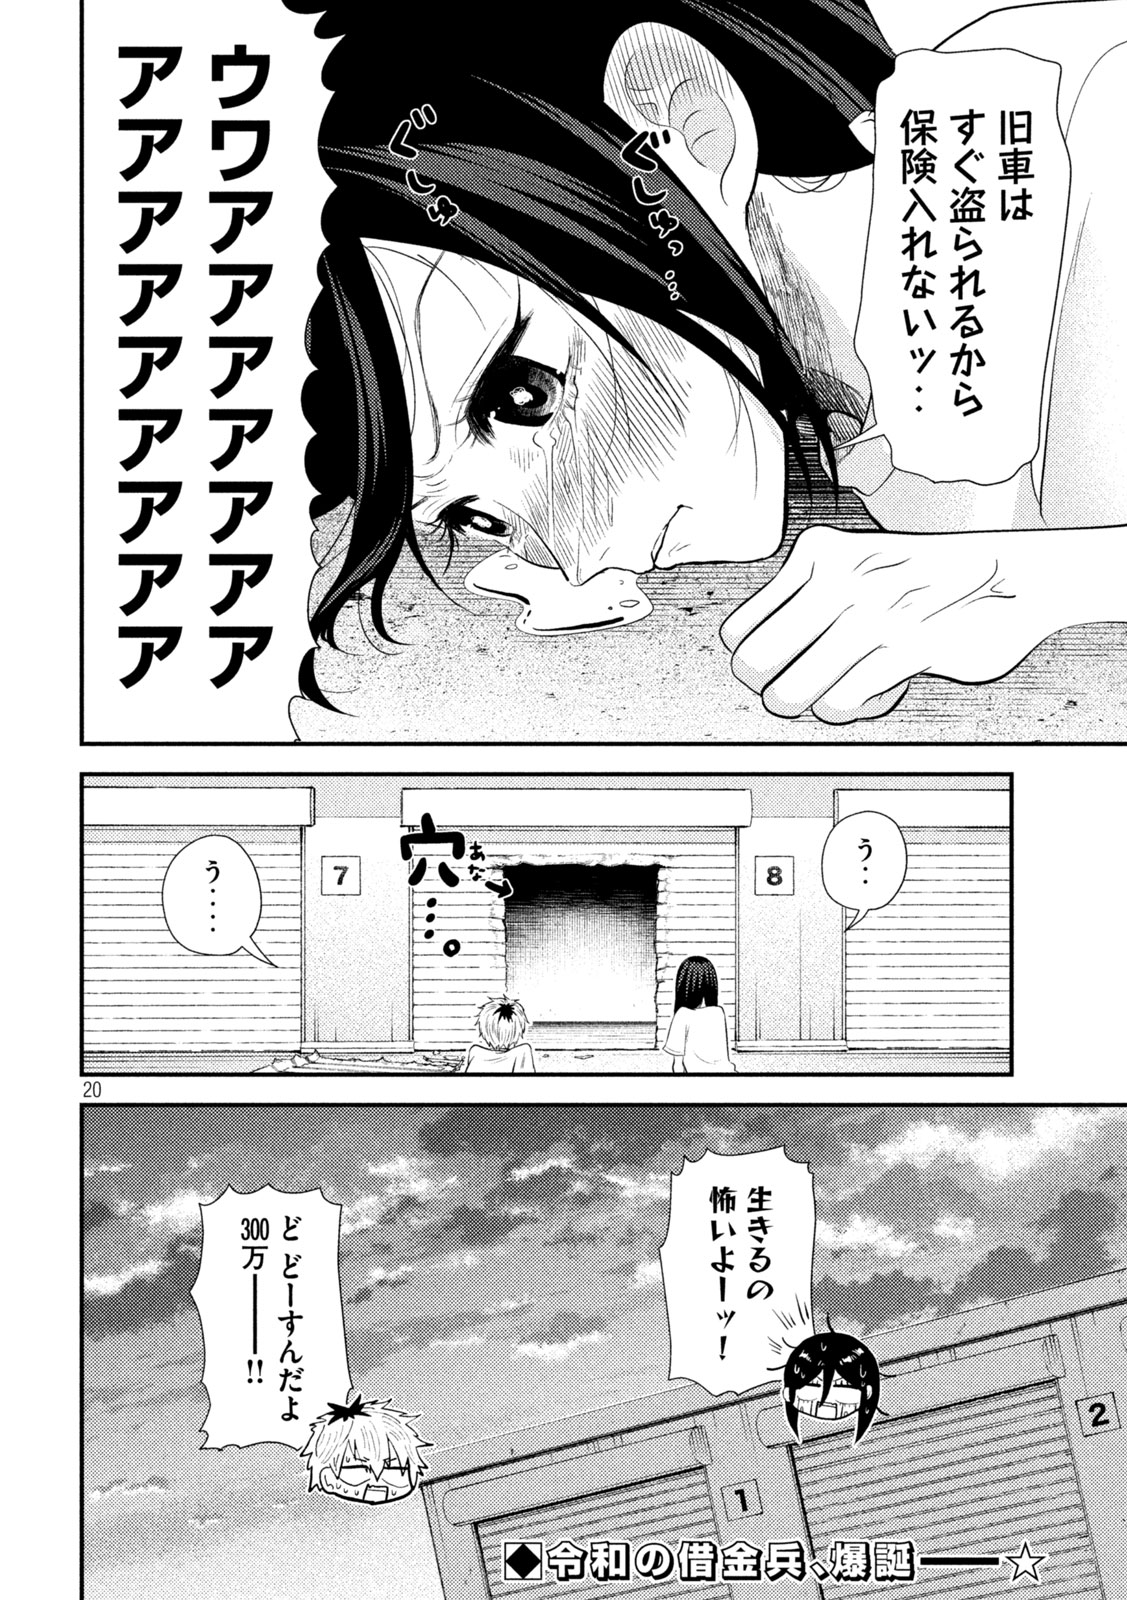 Heisei Haizanhei Sumire-chan - Chapter 12 - Page 20